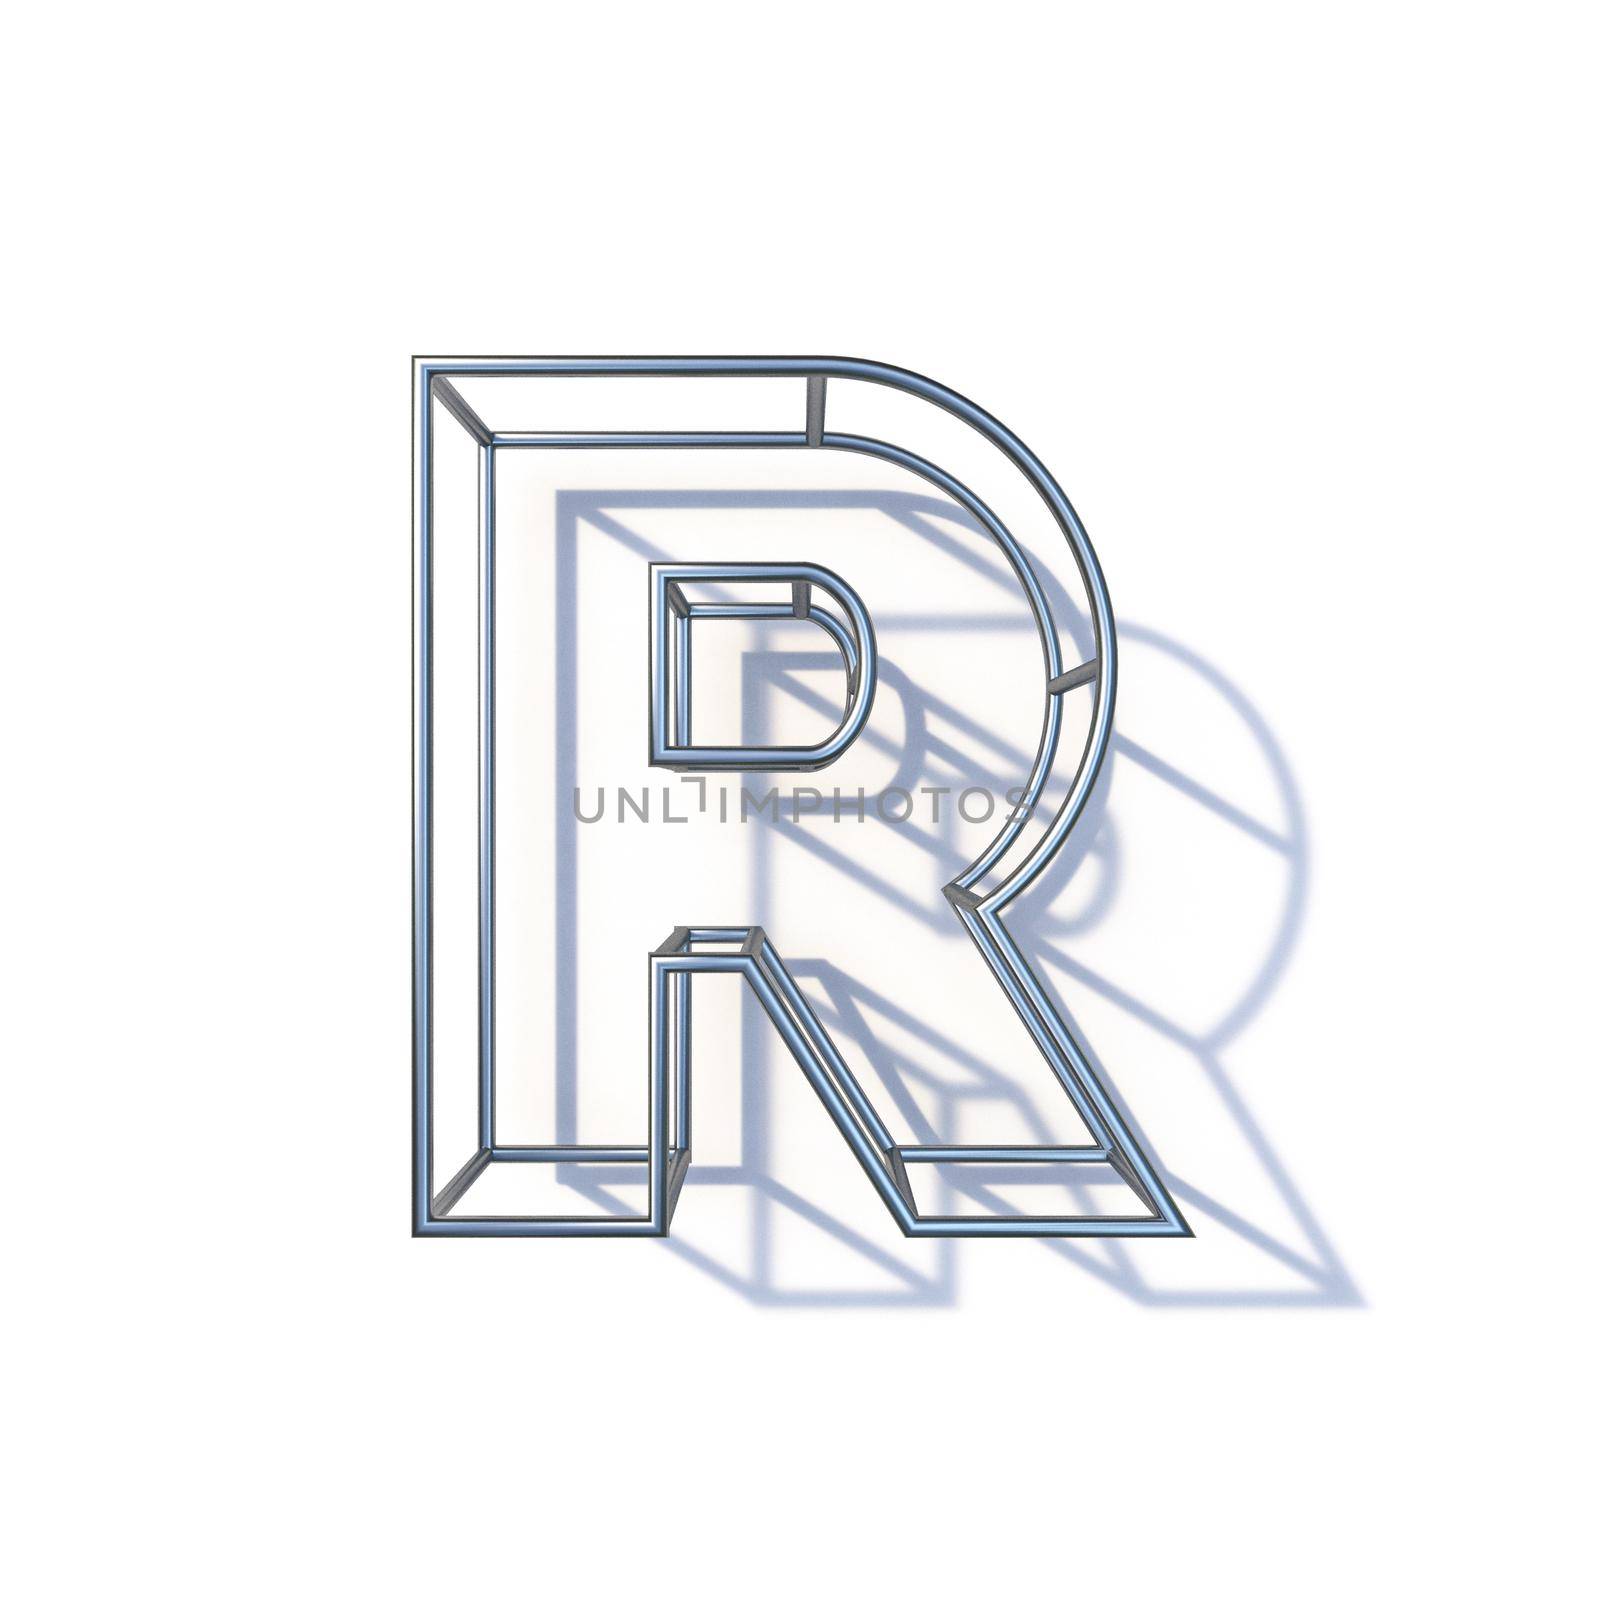 Steel wire frame font Letter R 3D render illustration isolated on white background